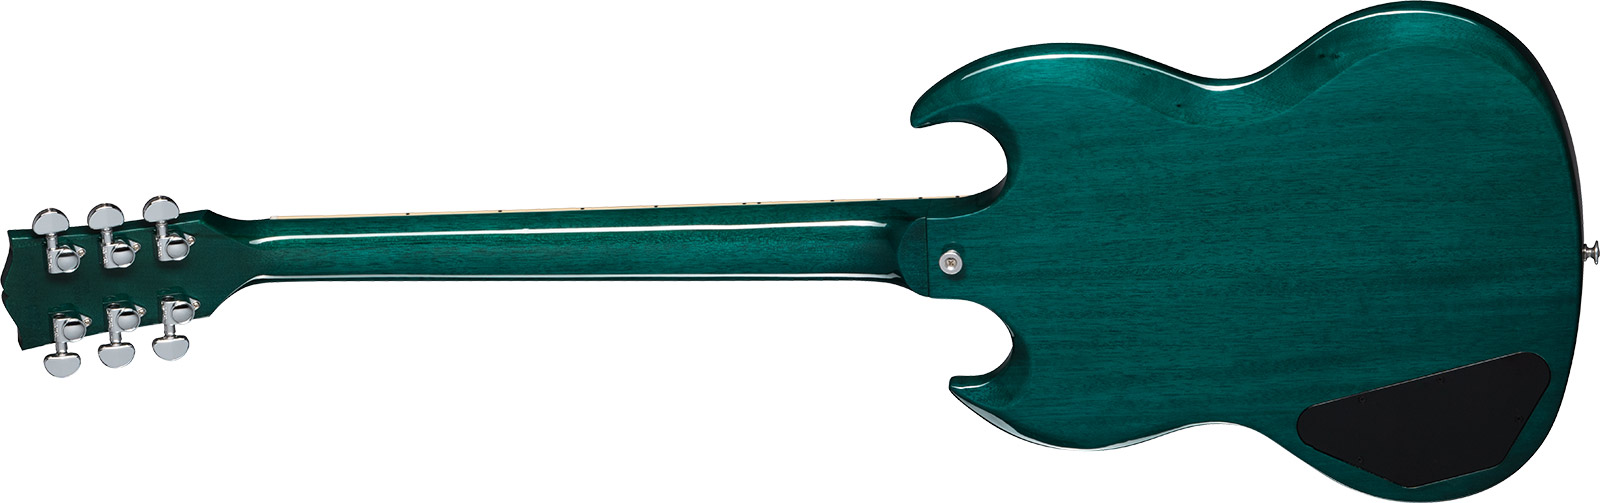 Gibson Sg Standard Custom Color 2h Ht Rw - Translucent Teal - Guitarra eléctrica de doble corte. - Variation 1